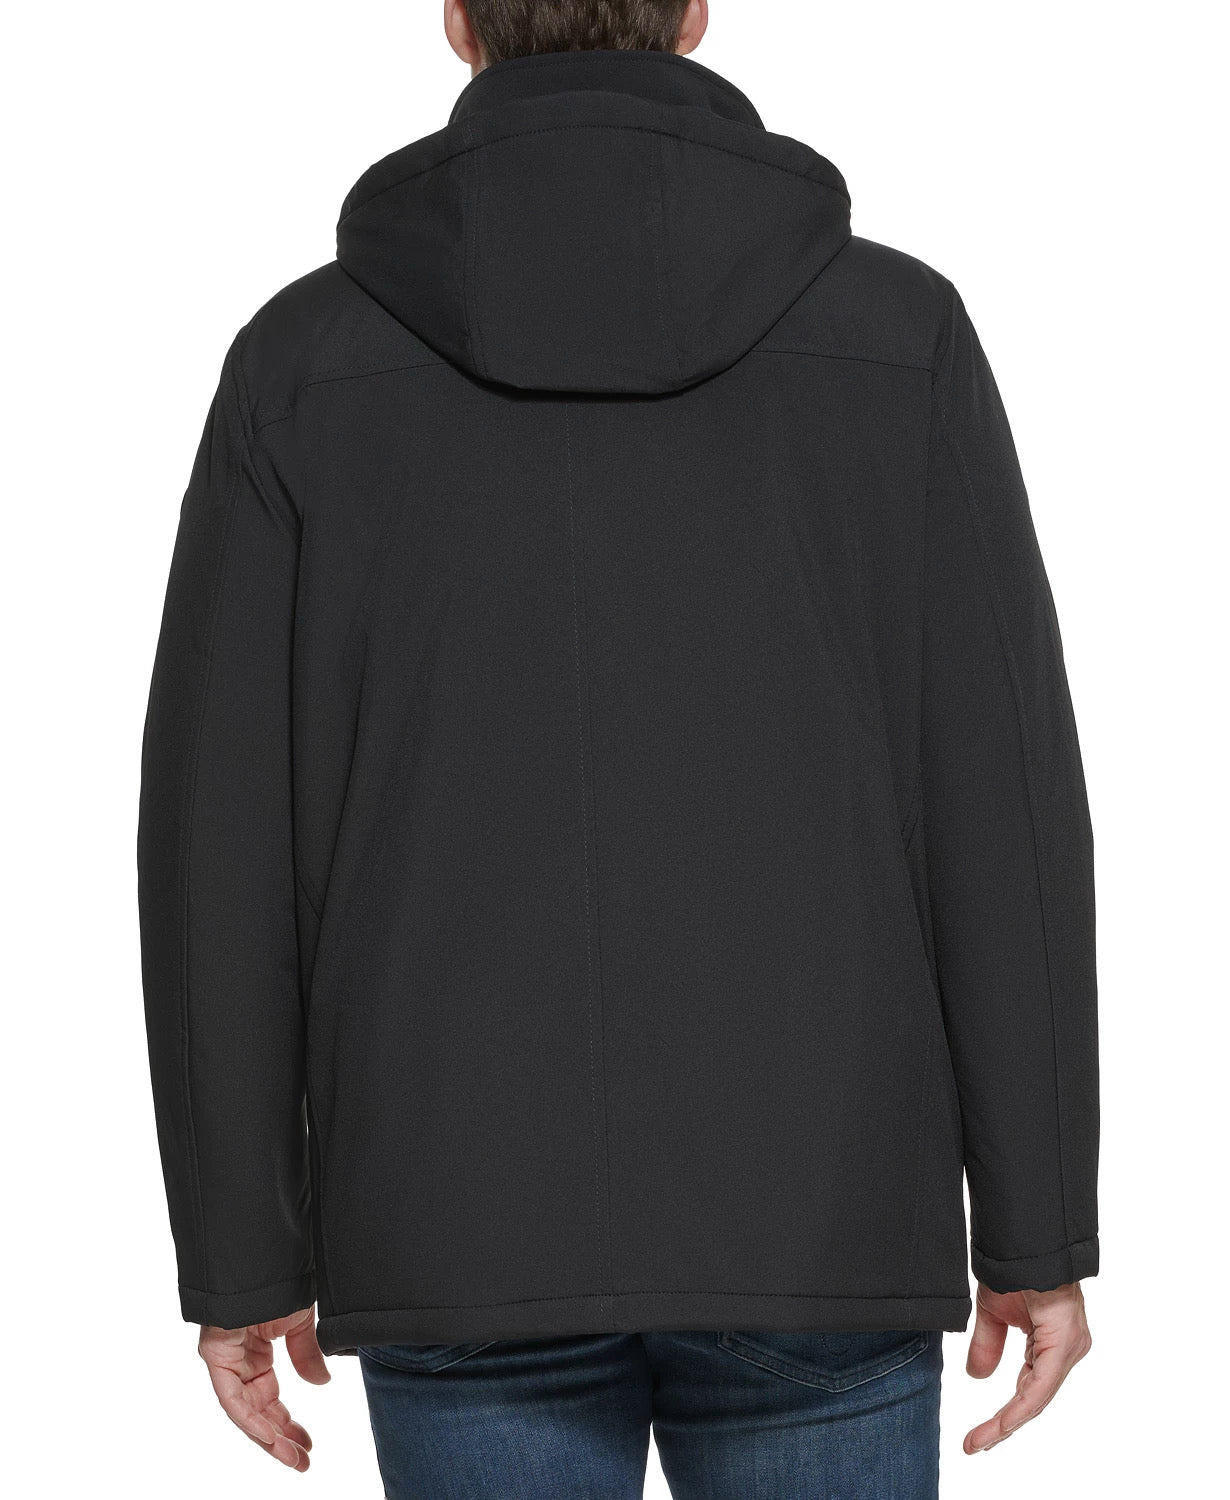 Calvin Klein Men Infinite Stretch Jacket Fleece Lined Bib Small Black